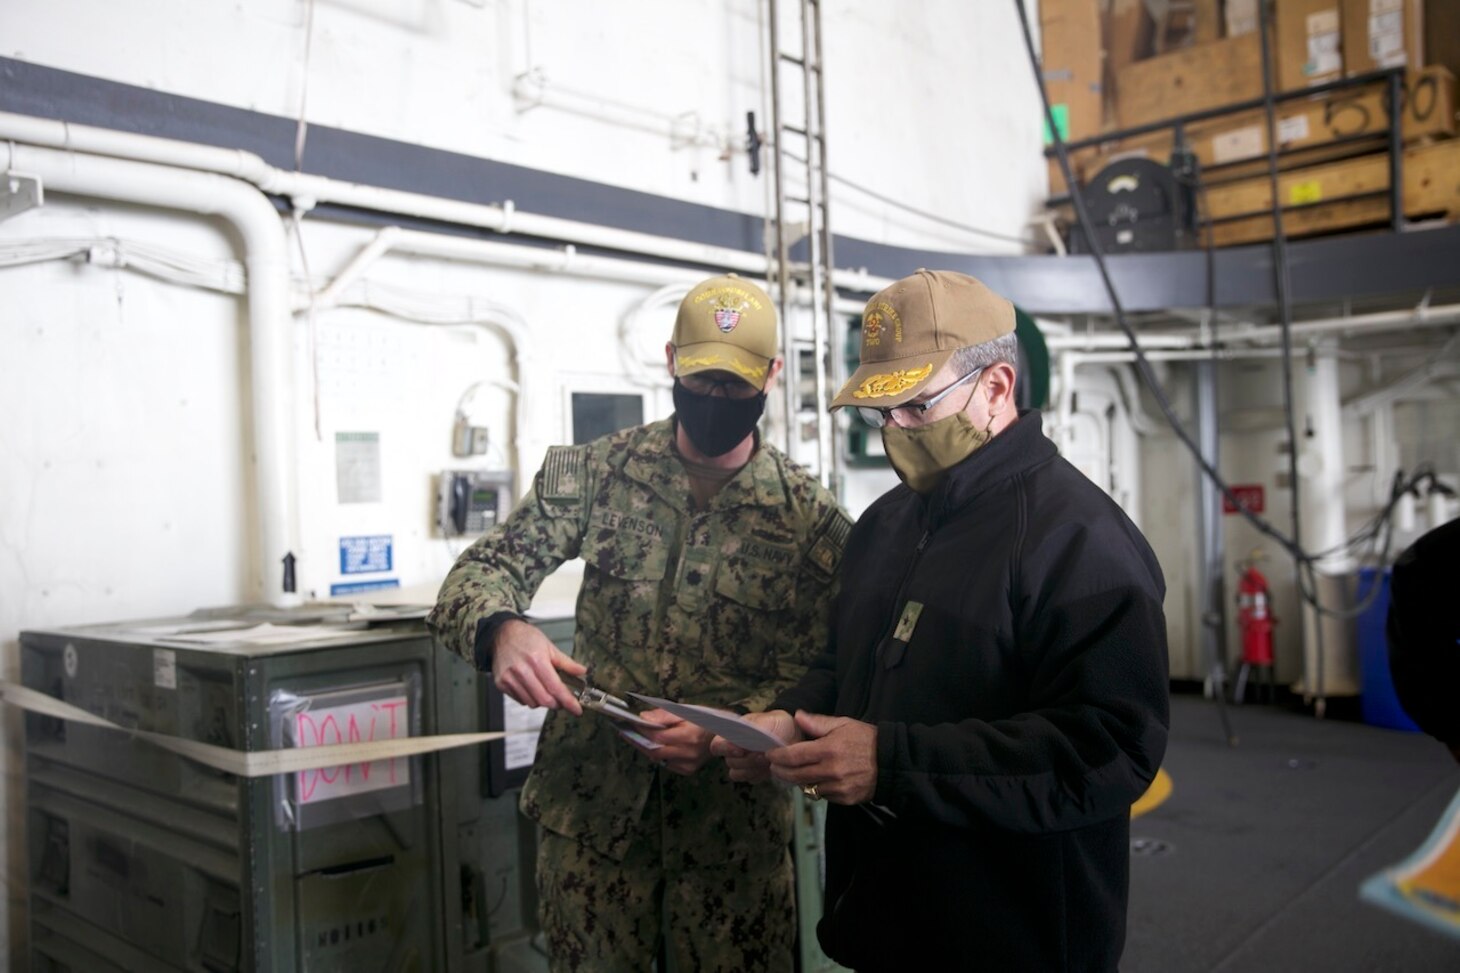 Rear Adm. Robert Katz, commander, Expeditionary Strike Group (ESG 2), reviews paperwork aboard the amphibious transport dock ship USS San Antonio (LPD 17) before receiving the COVID-19 vaccination, Jan. 11, 2021.